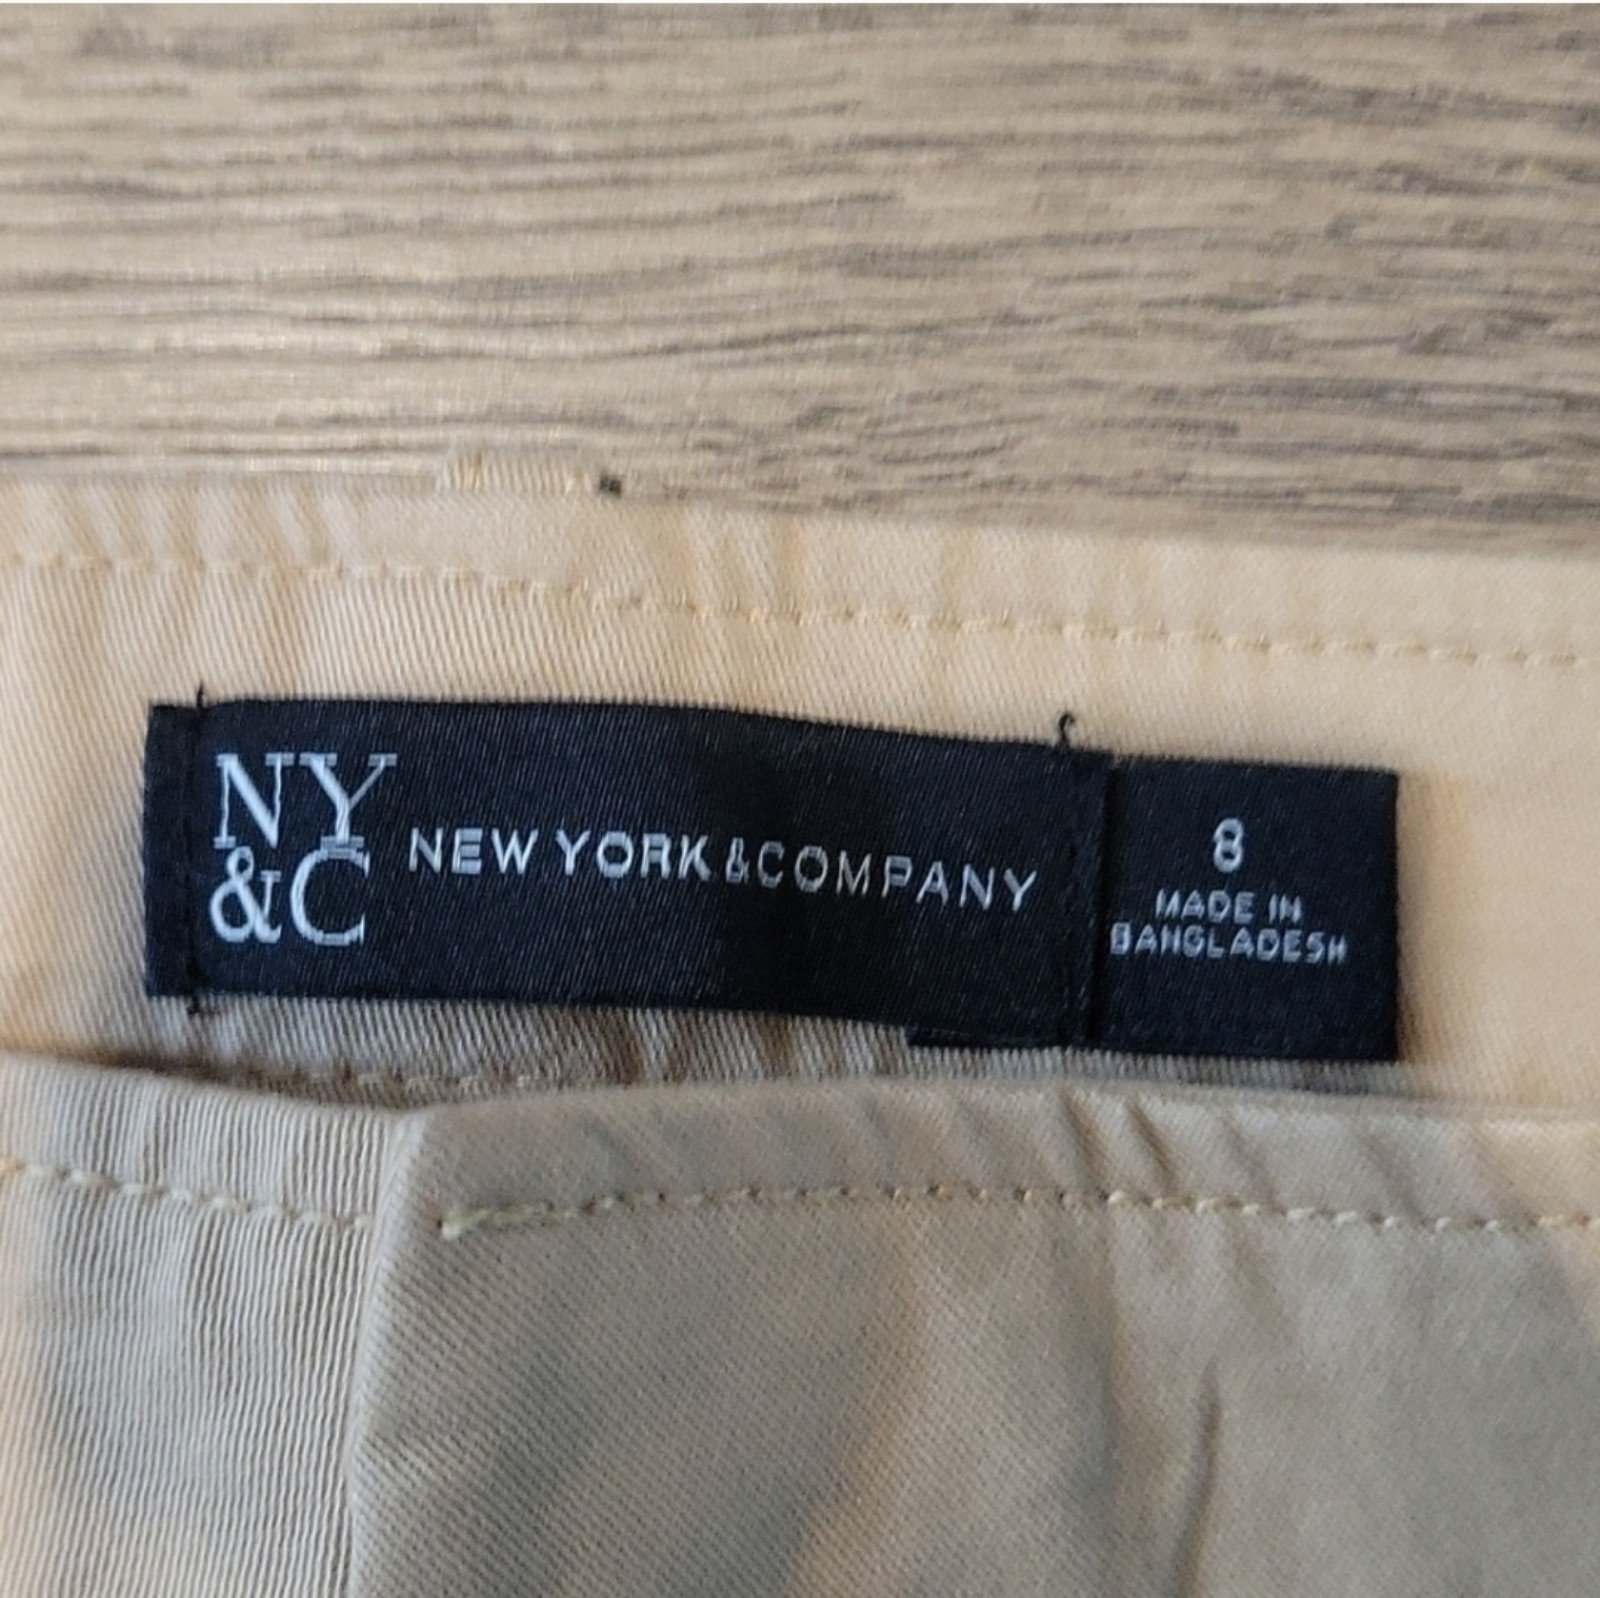 Comfortable New York &company khaki women shorts LgToRYlHp Online Exclusive